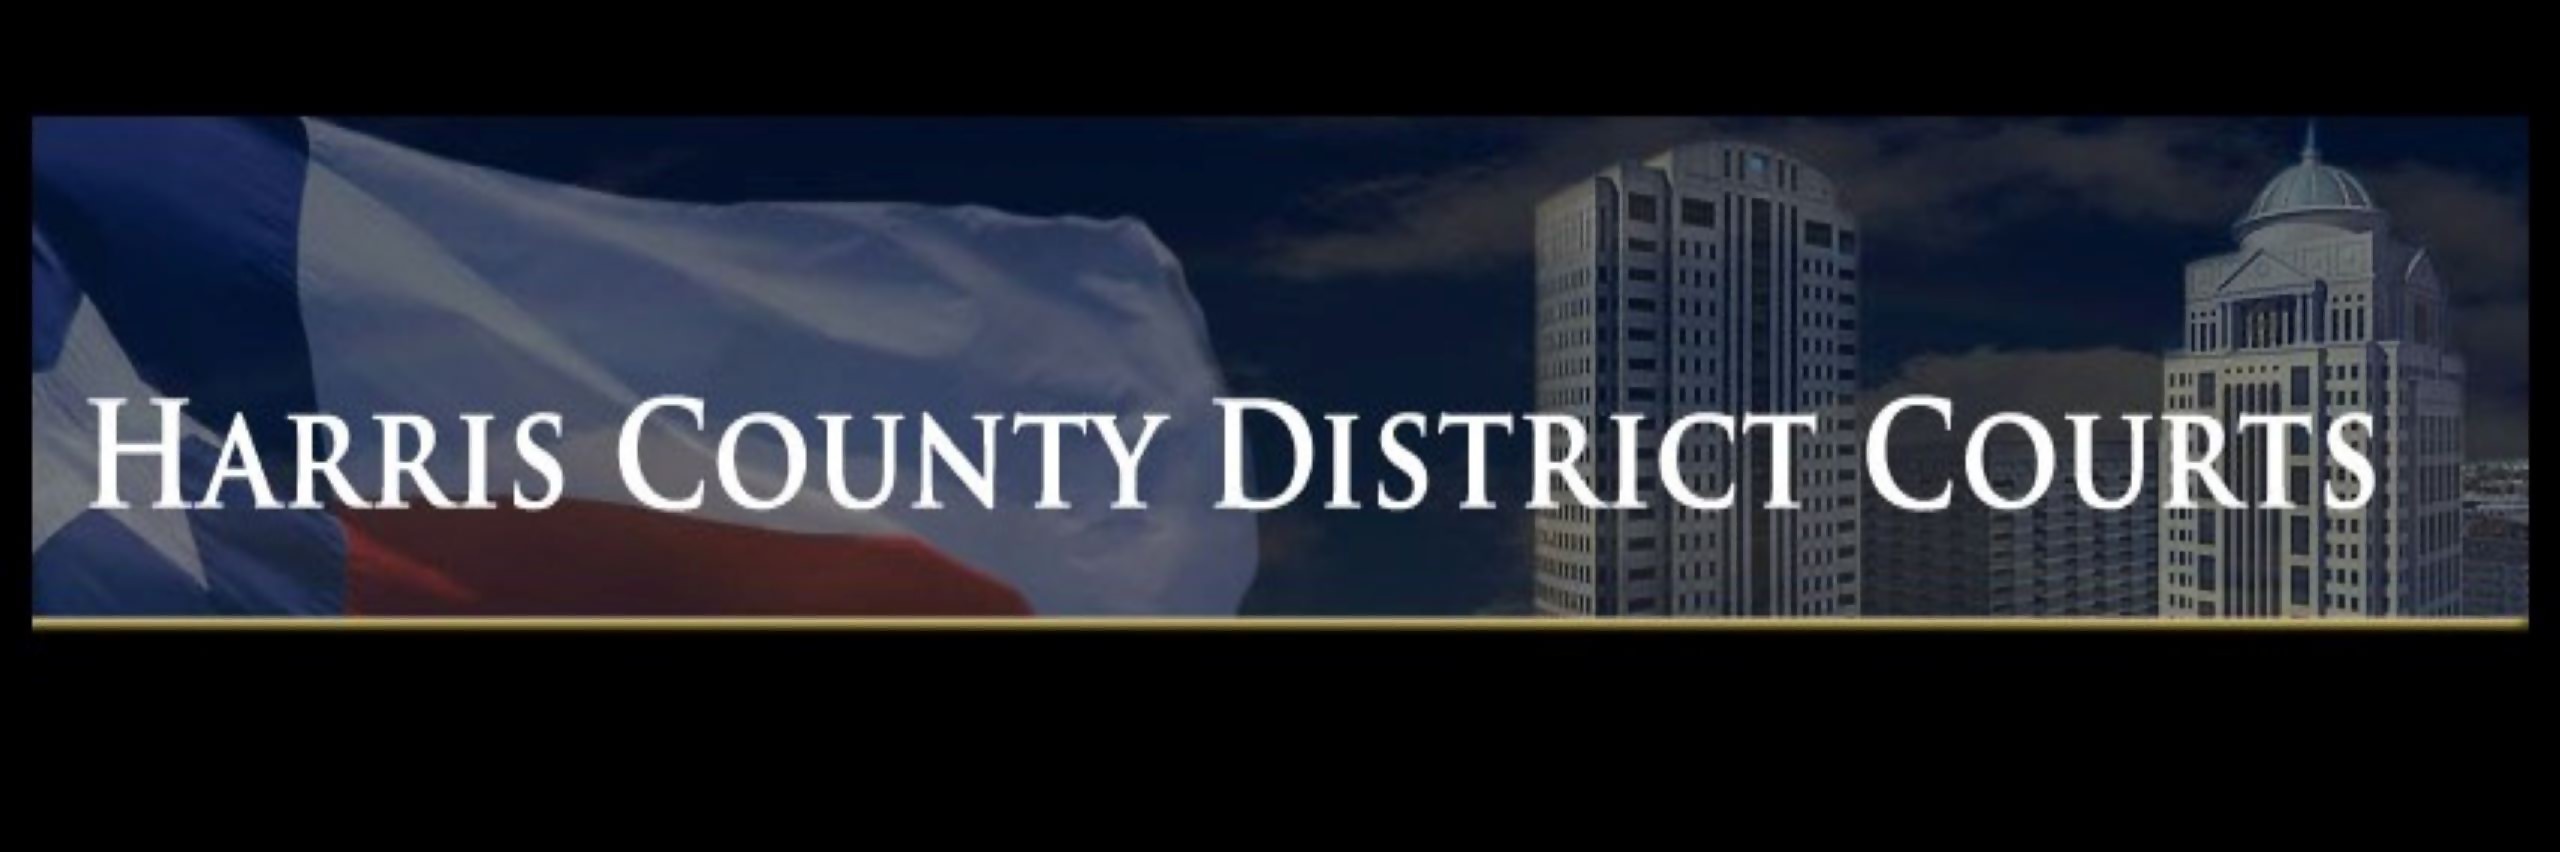 190th District Court - Live Stream